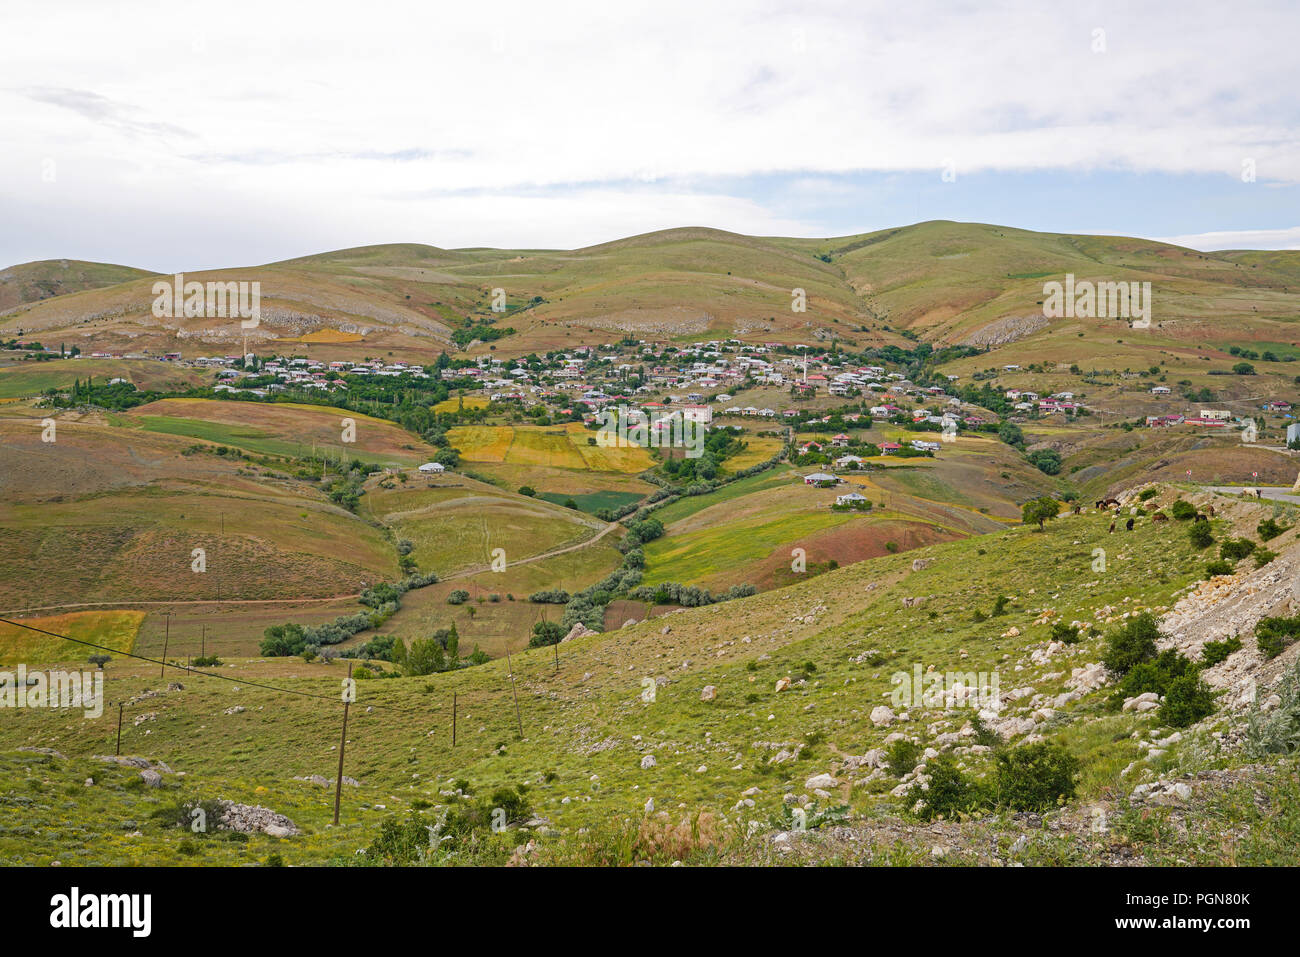 Villaggio di montagna in Turchia. Splendido paesaggio di campagna. Buyuk tatlar, tatli, afsin, Kahramanmaras Foto Stock